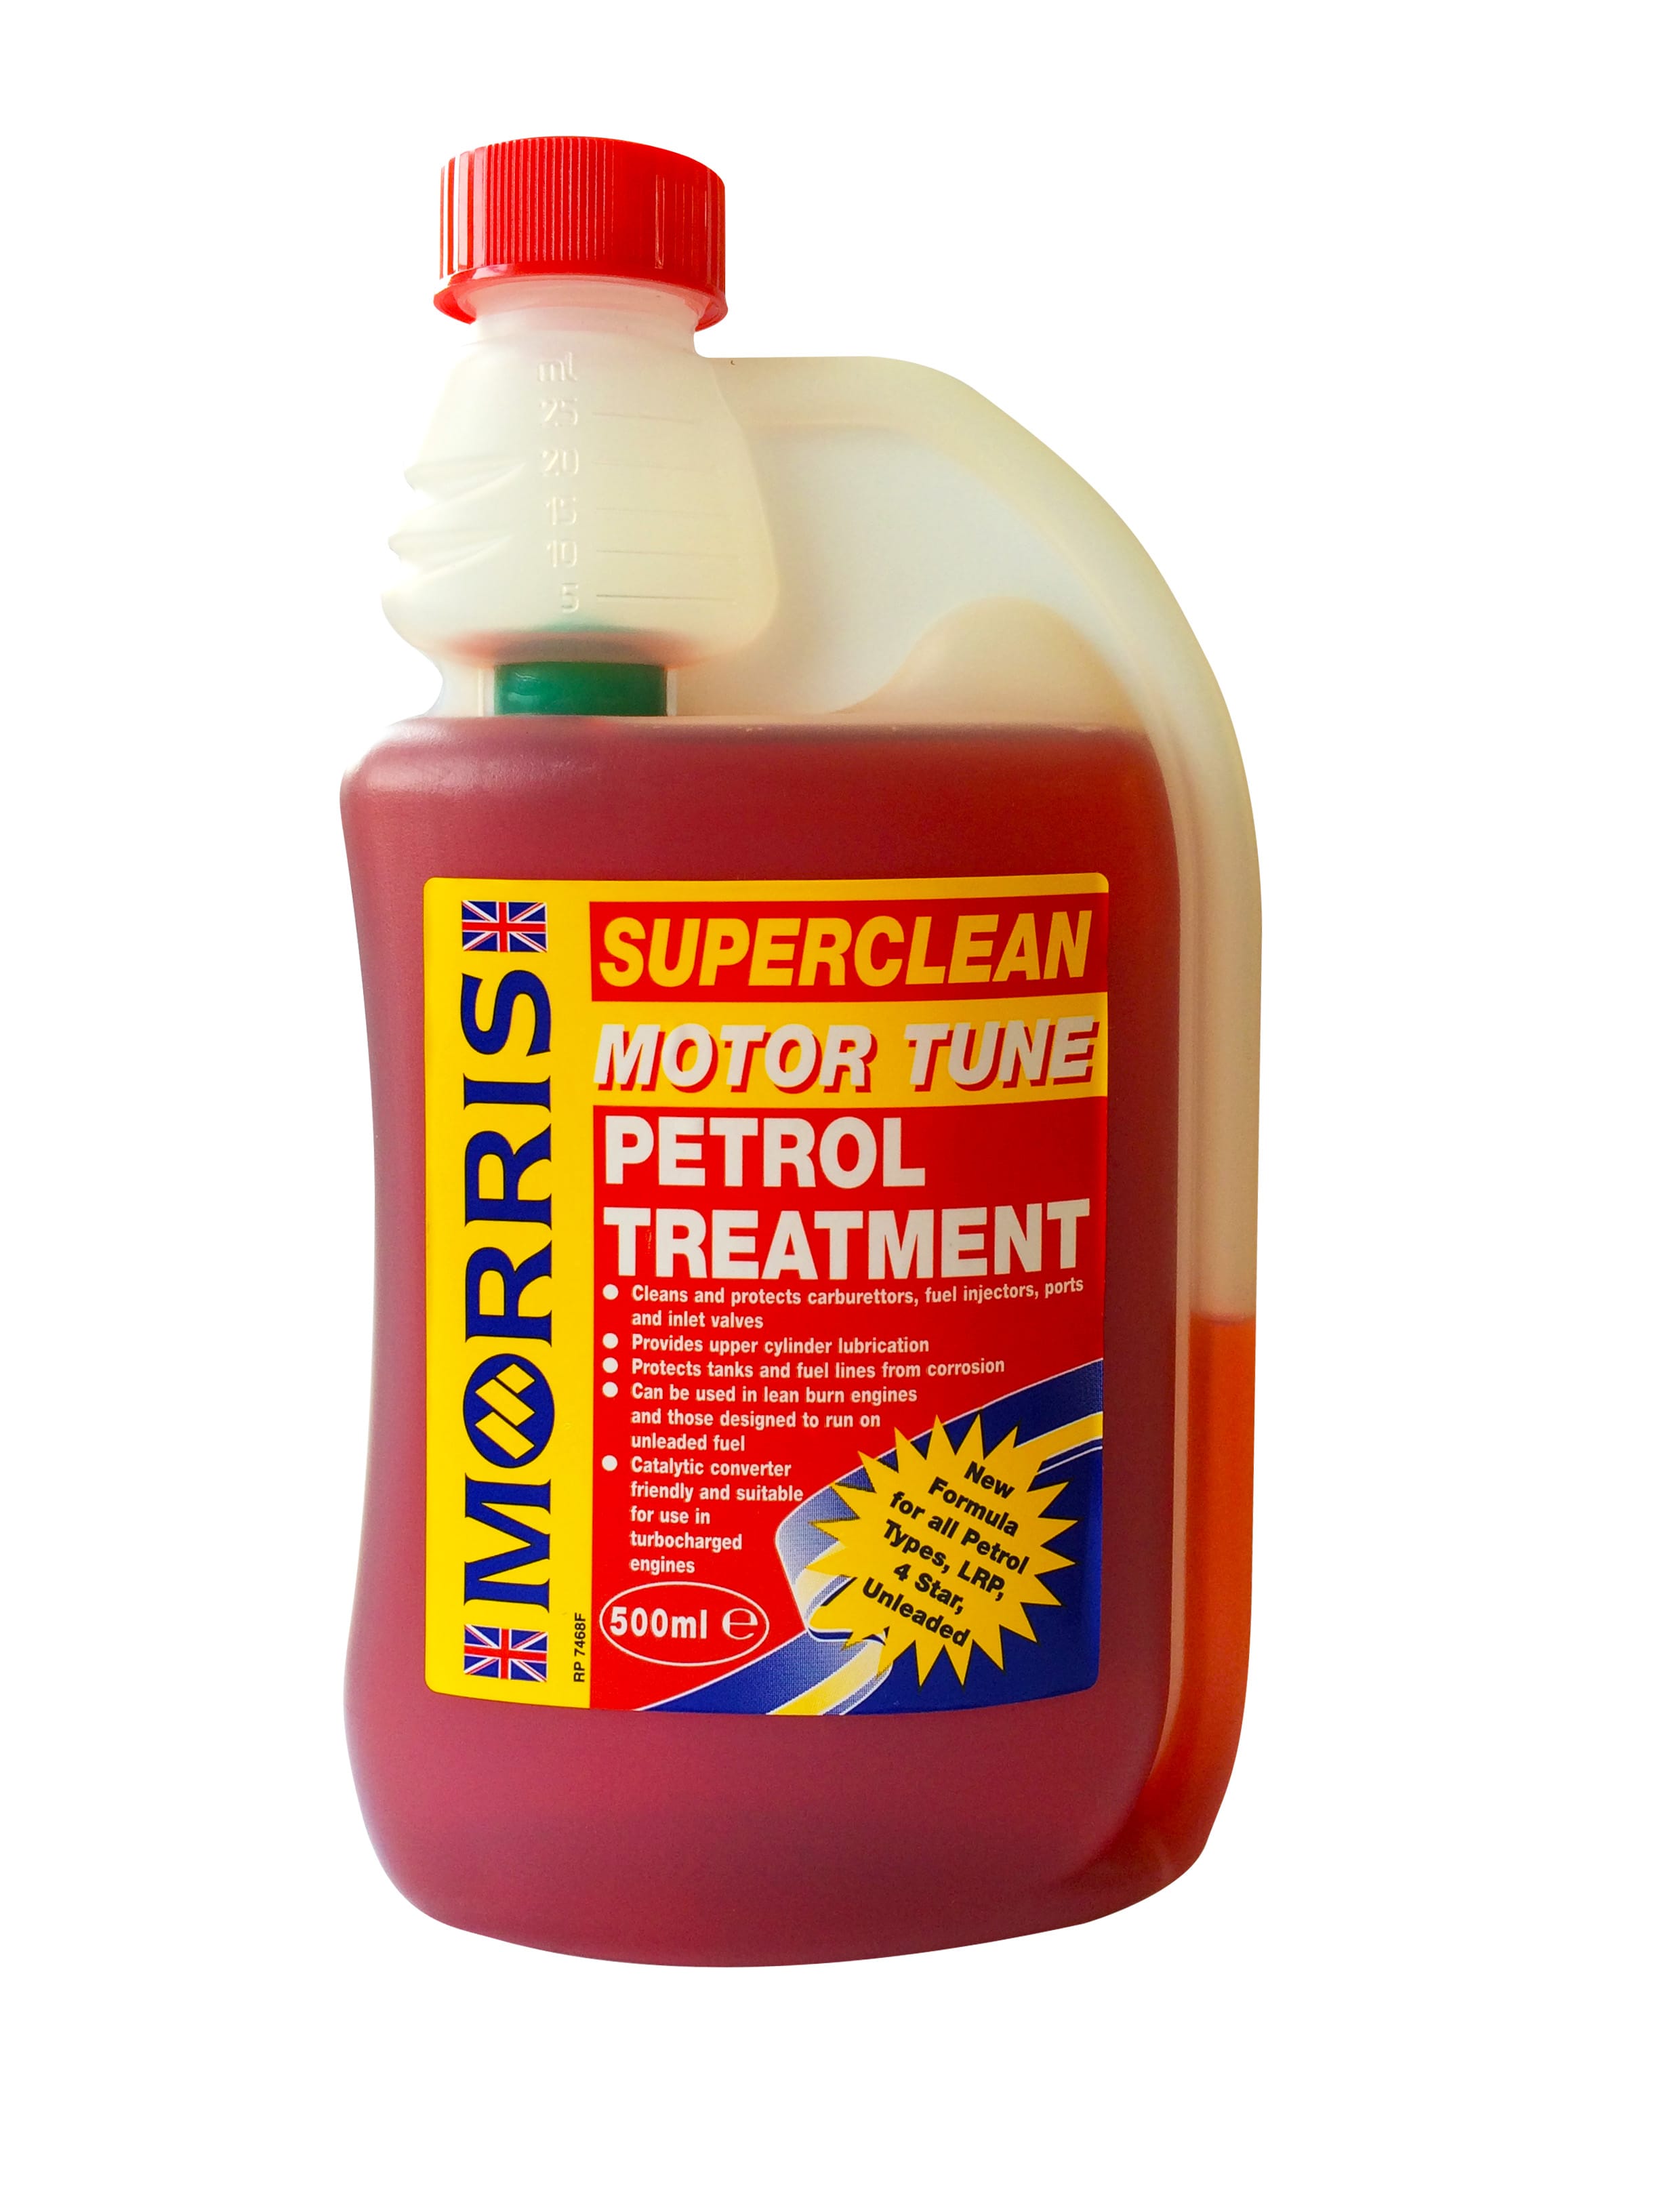 Superclean Motortune Petrol Treatment